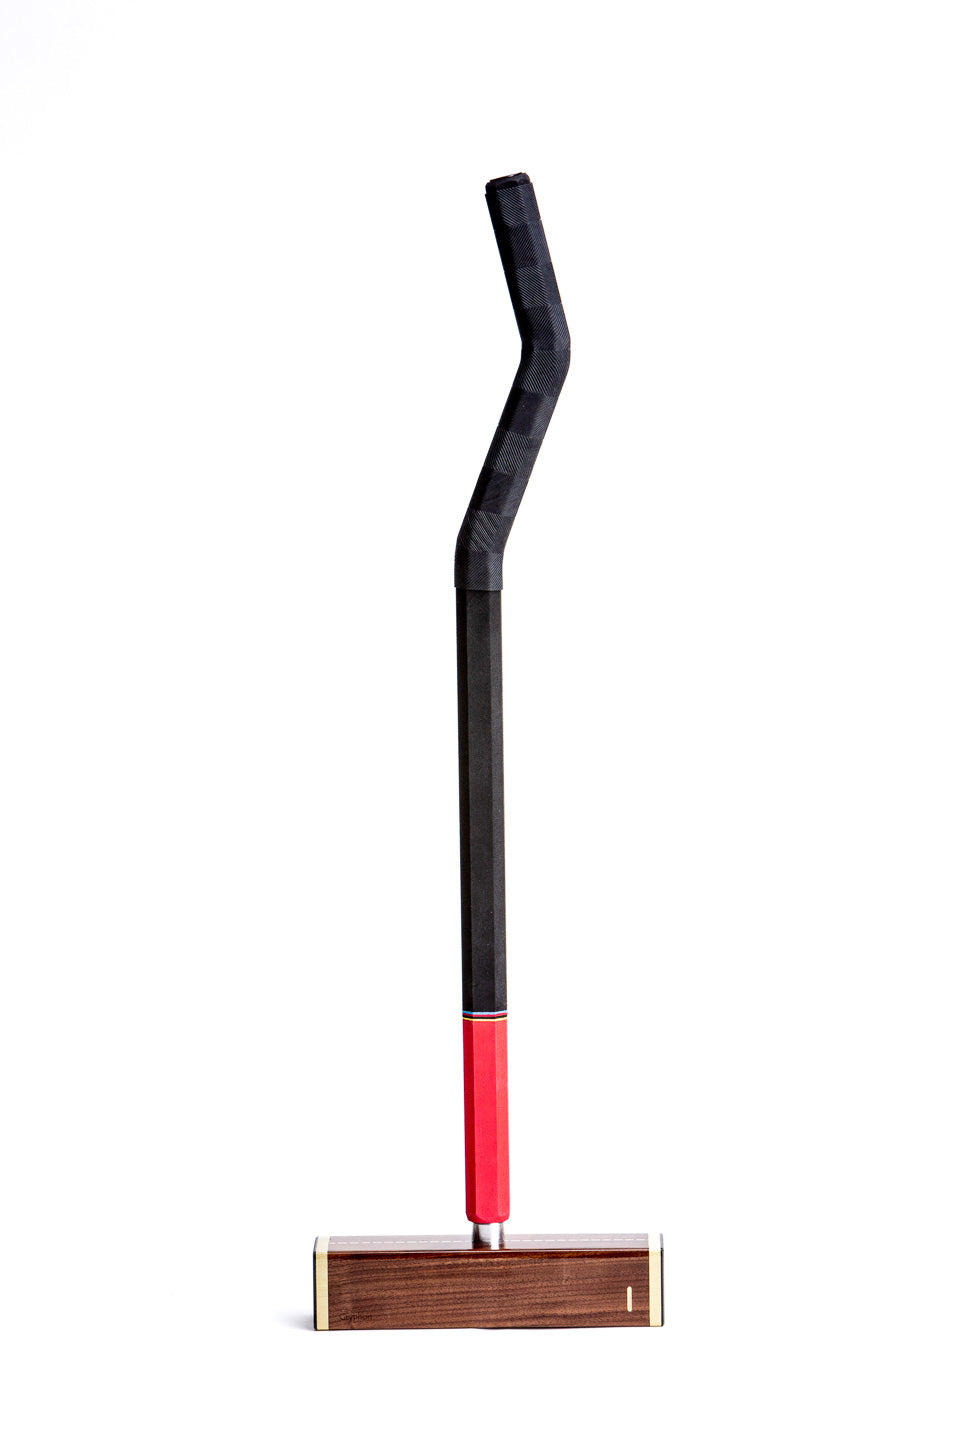 Gryphon croquet mallet Double bend handle